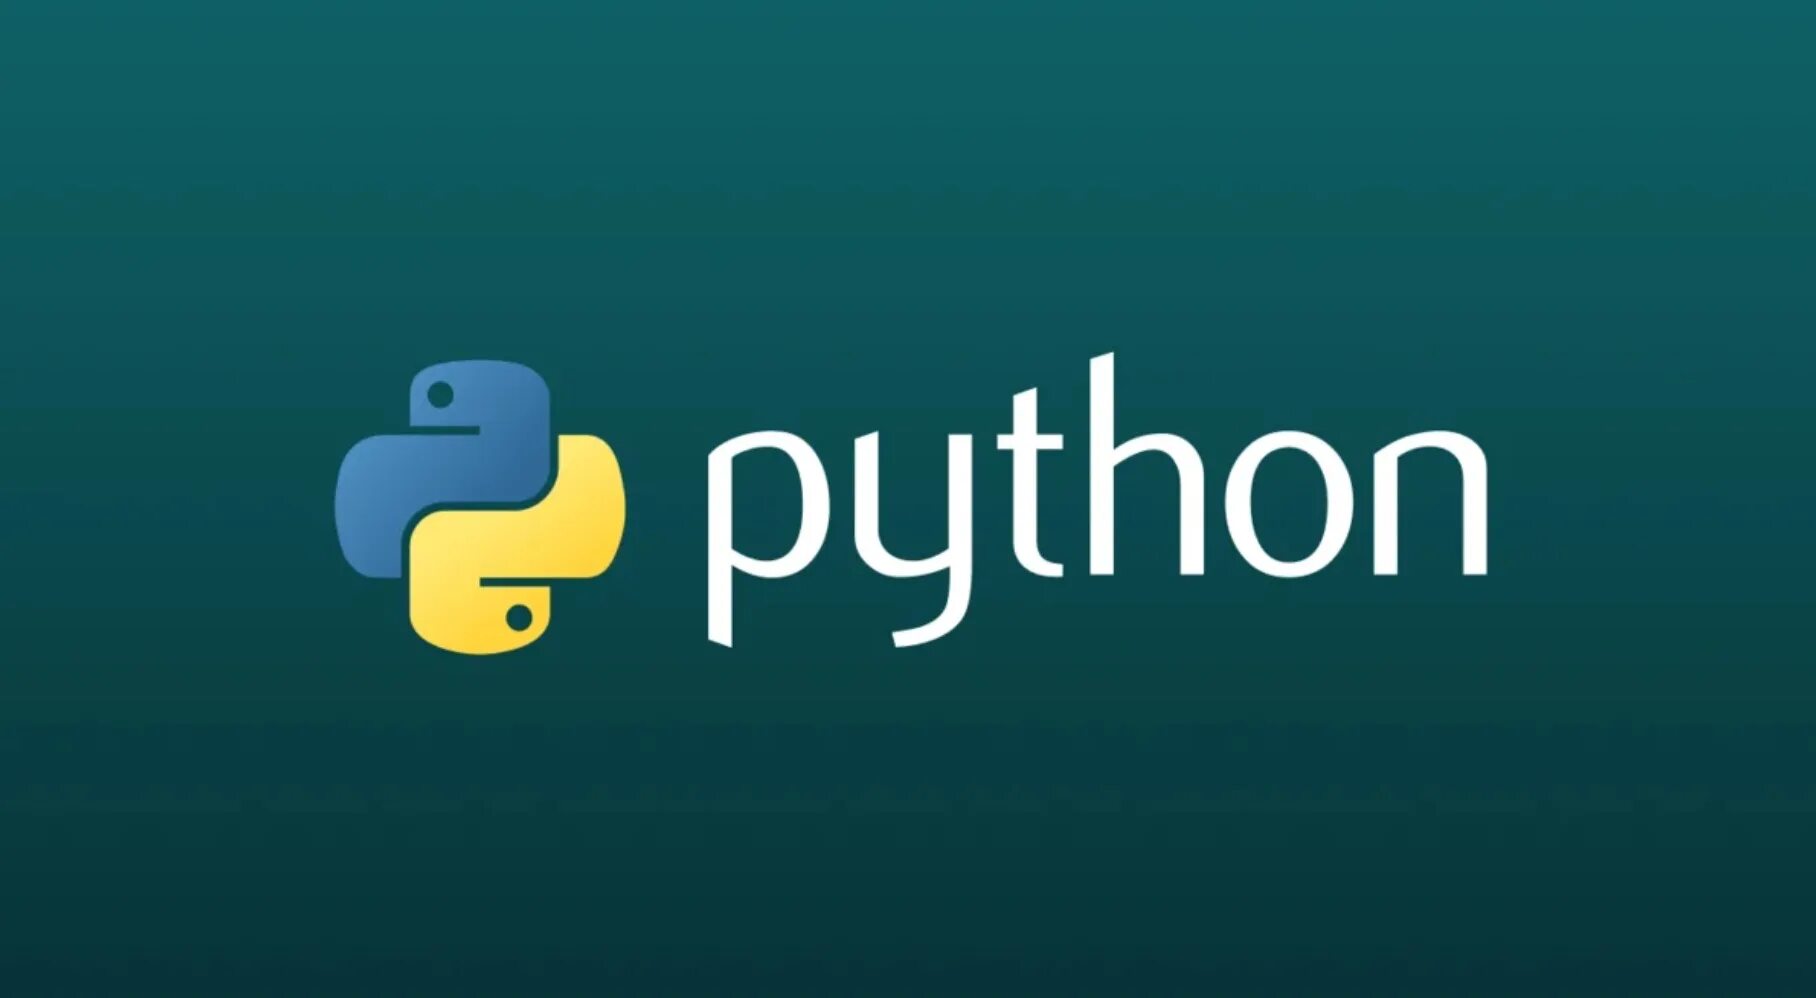 Python 3 library. Пайтон язык программирования. Язык программирования Python. Питон программирование. Пион язык программирования.